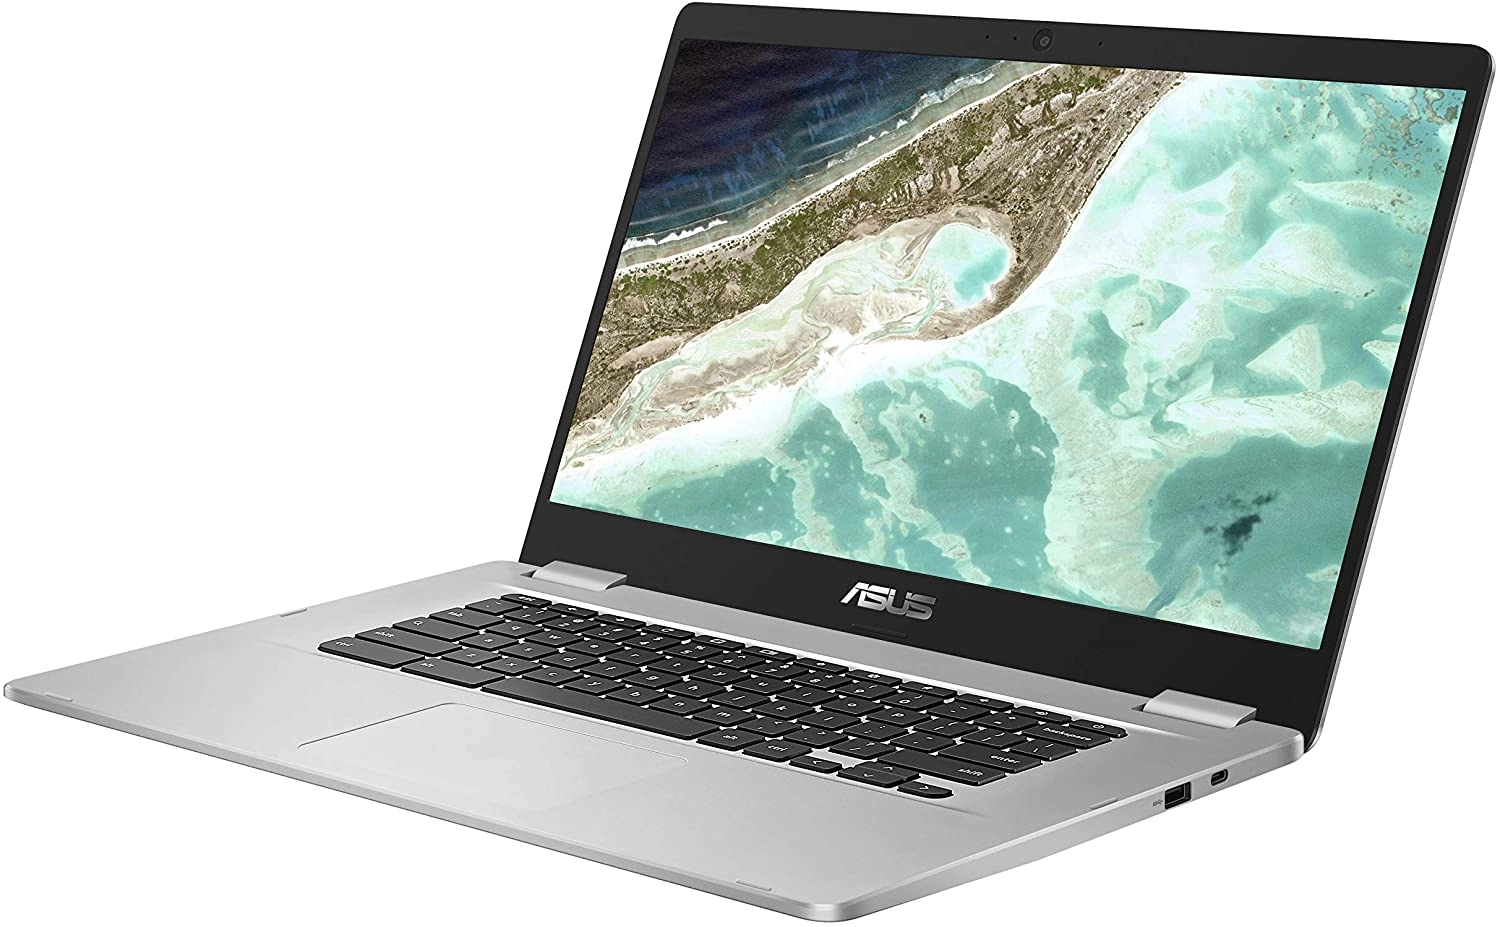 Asus Chromebook C423 laptop image